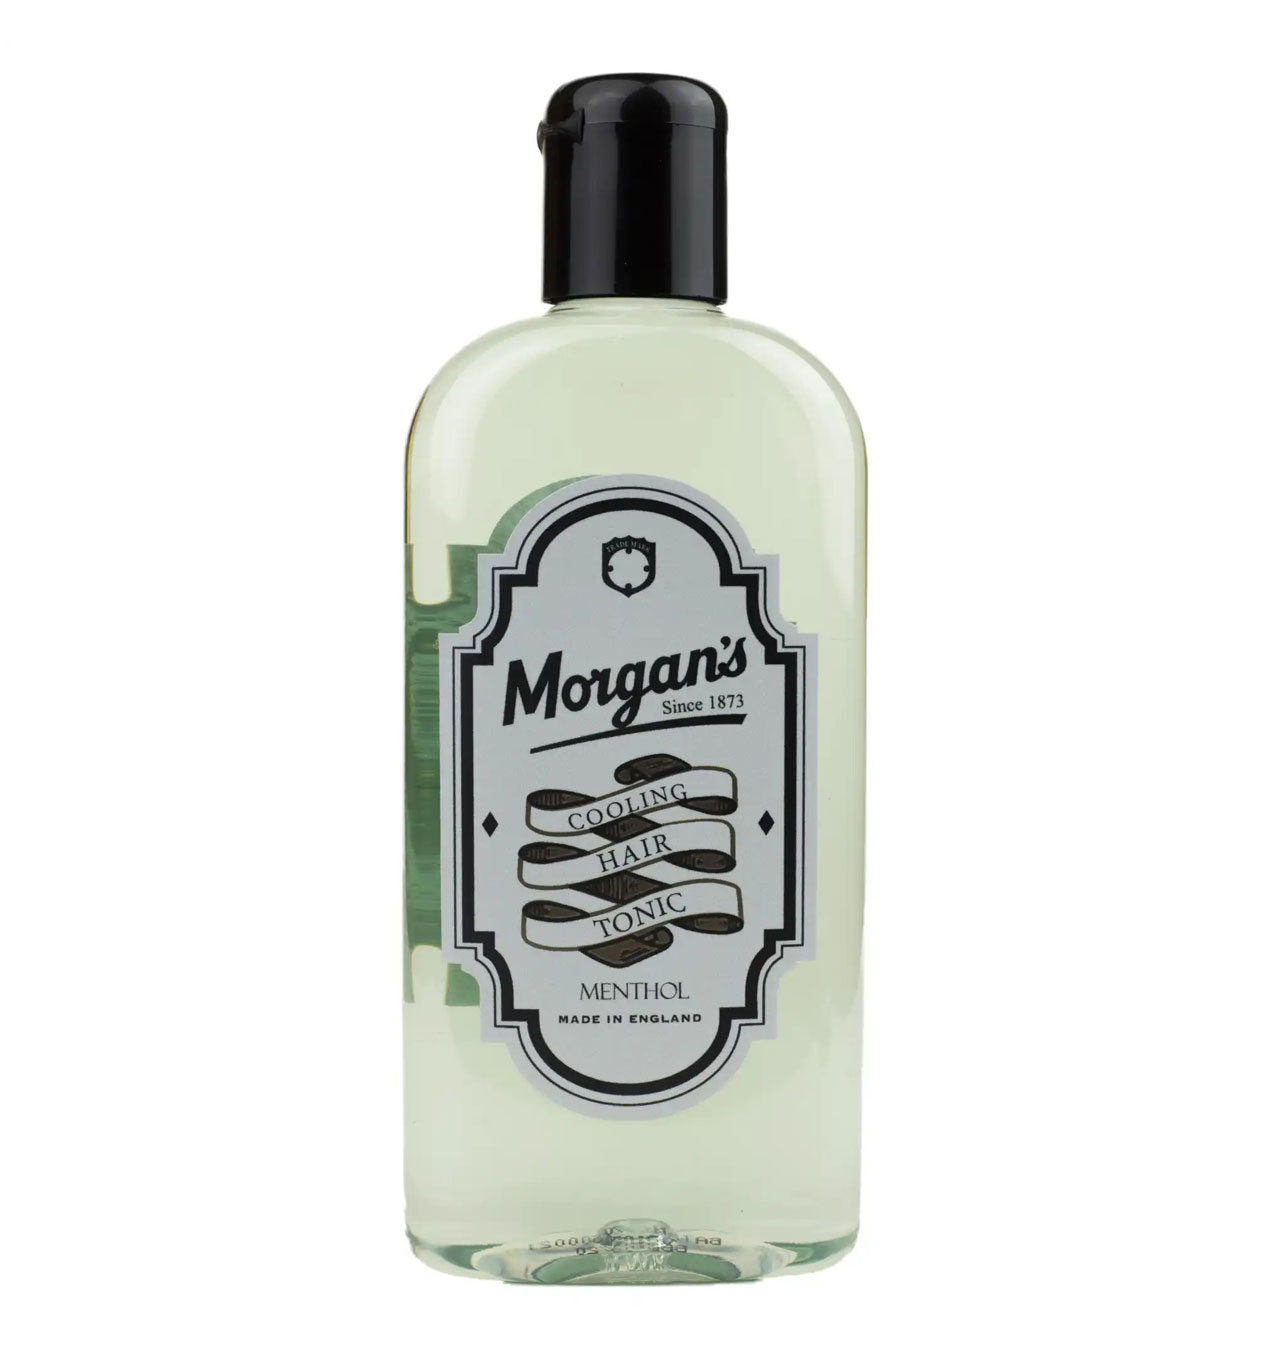 Morgans - Menthol Cooling Hair Tonic (250 ml)